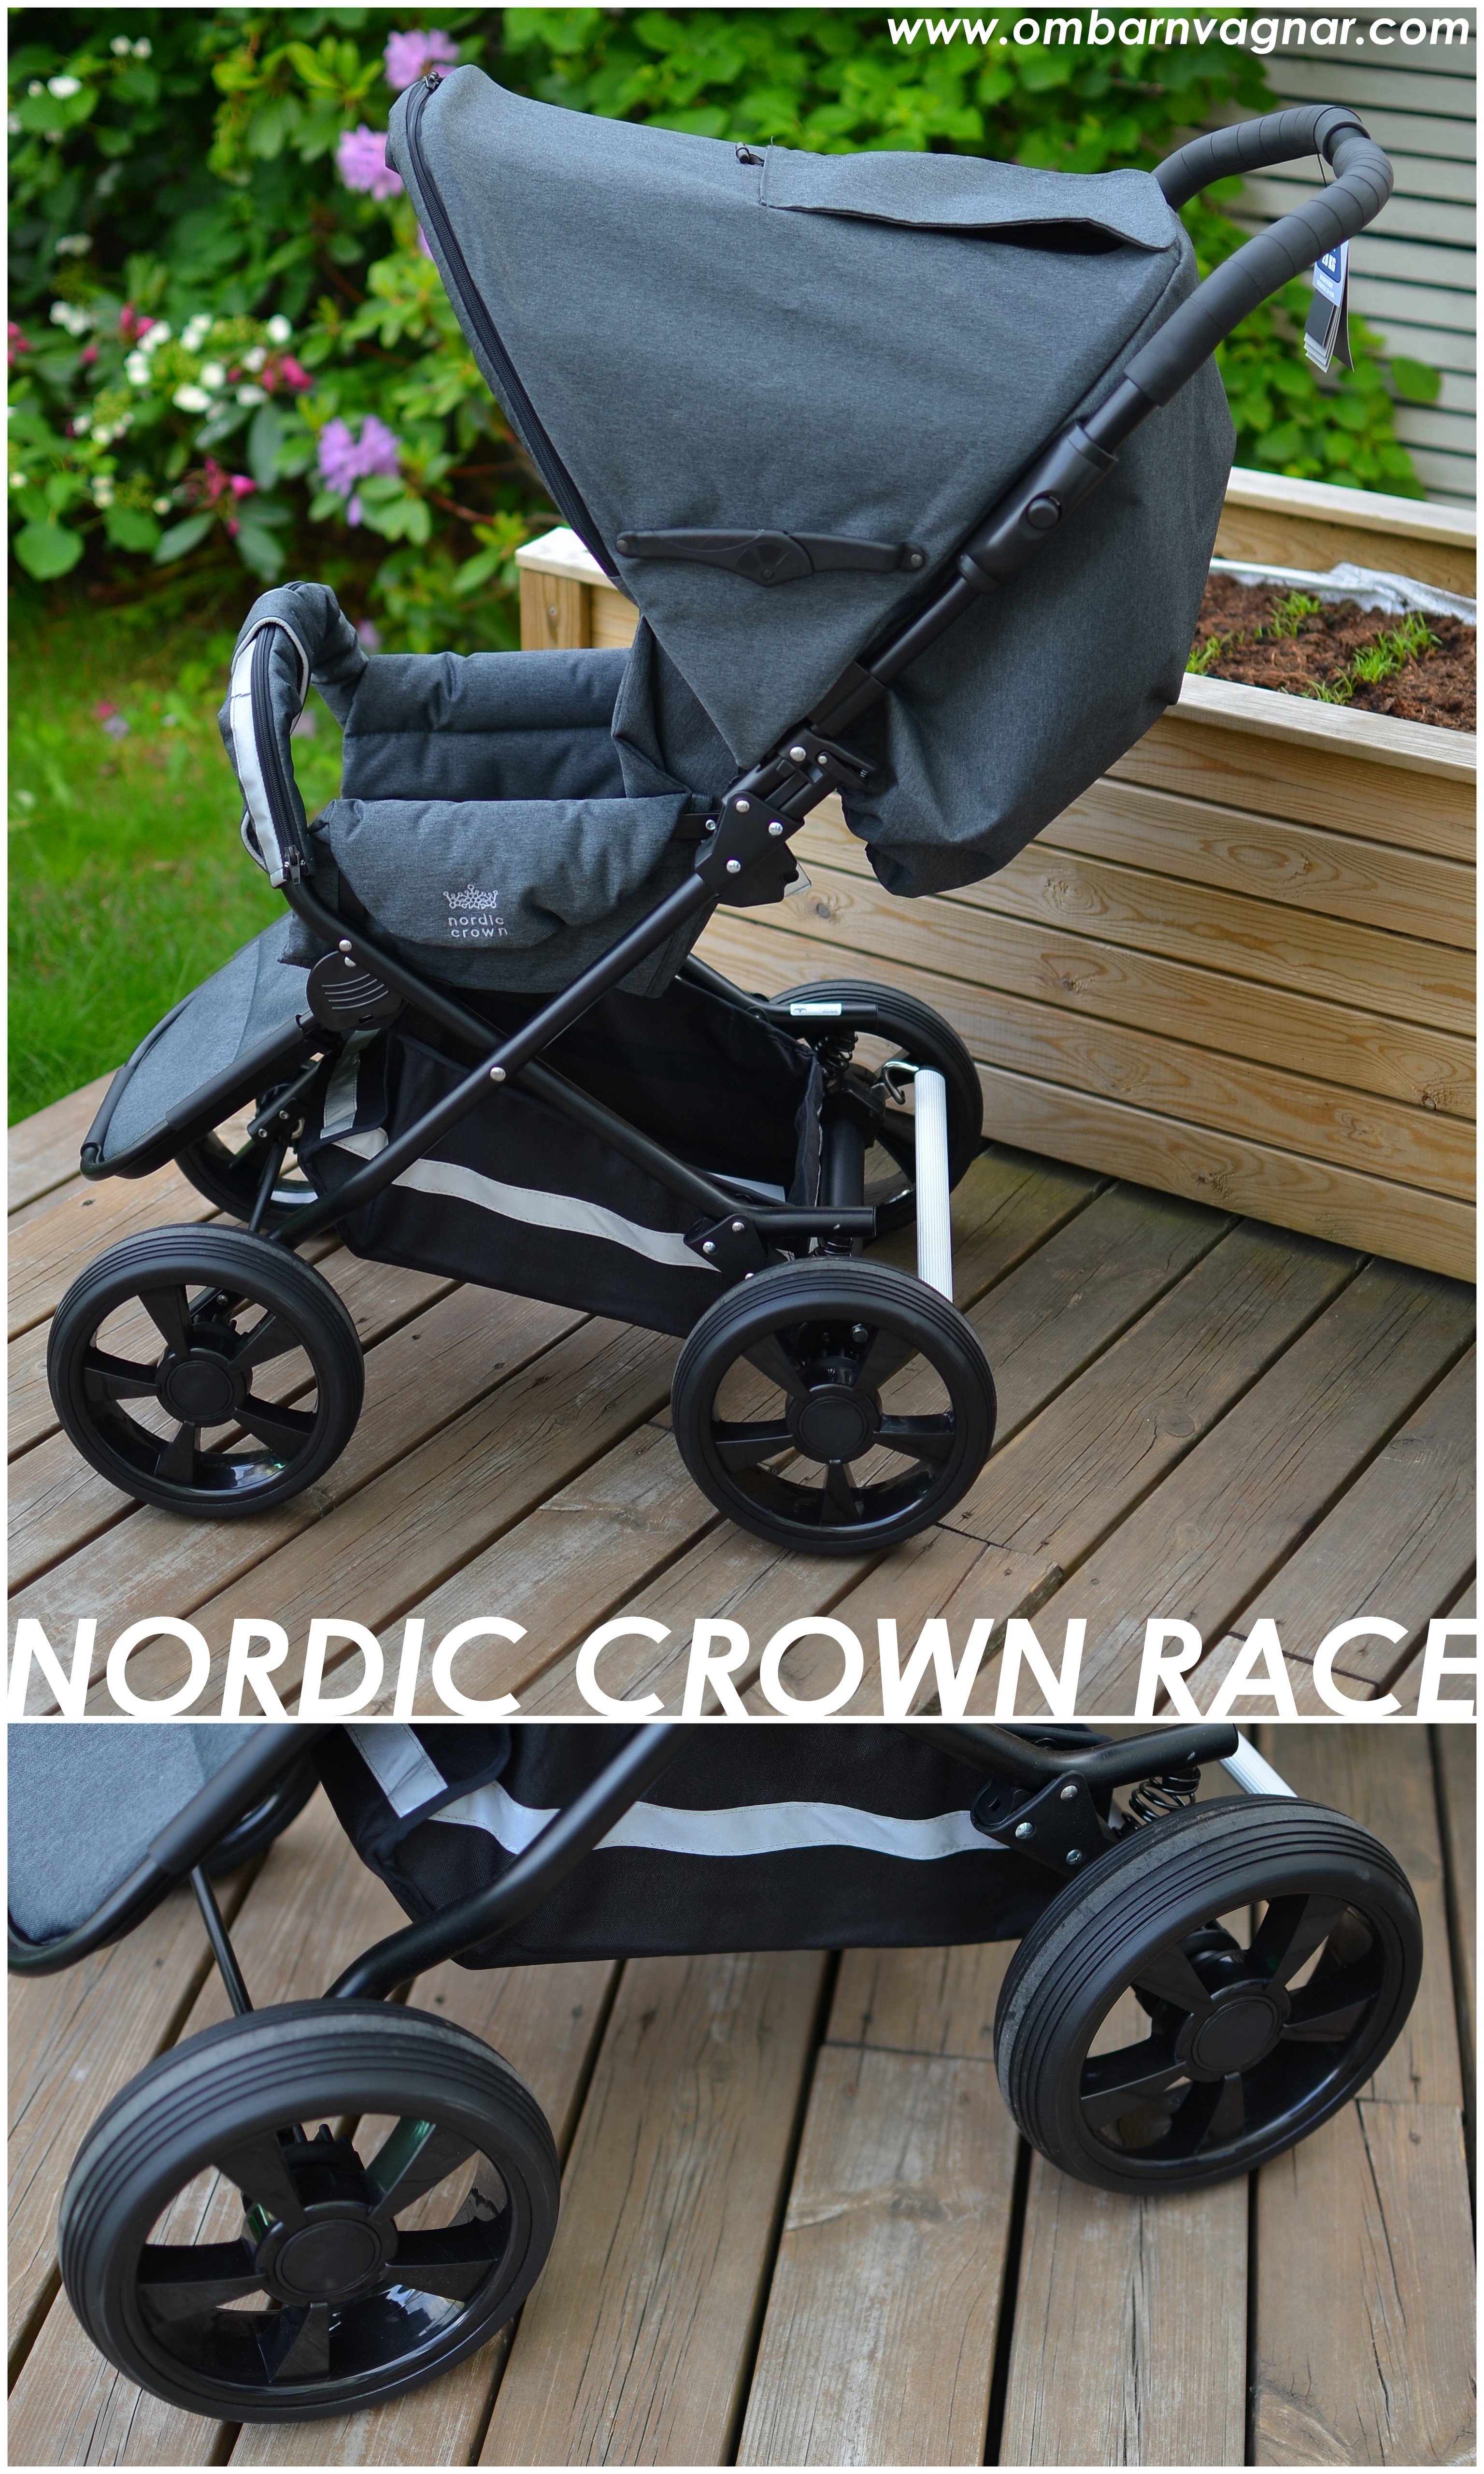 Recension av Nordic Crown Race